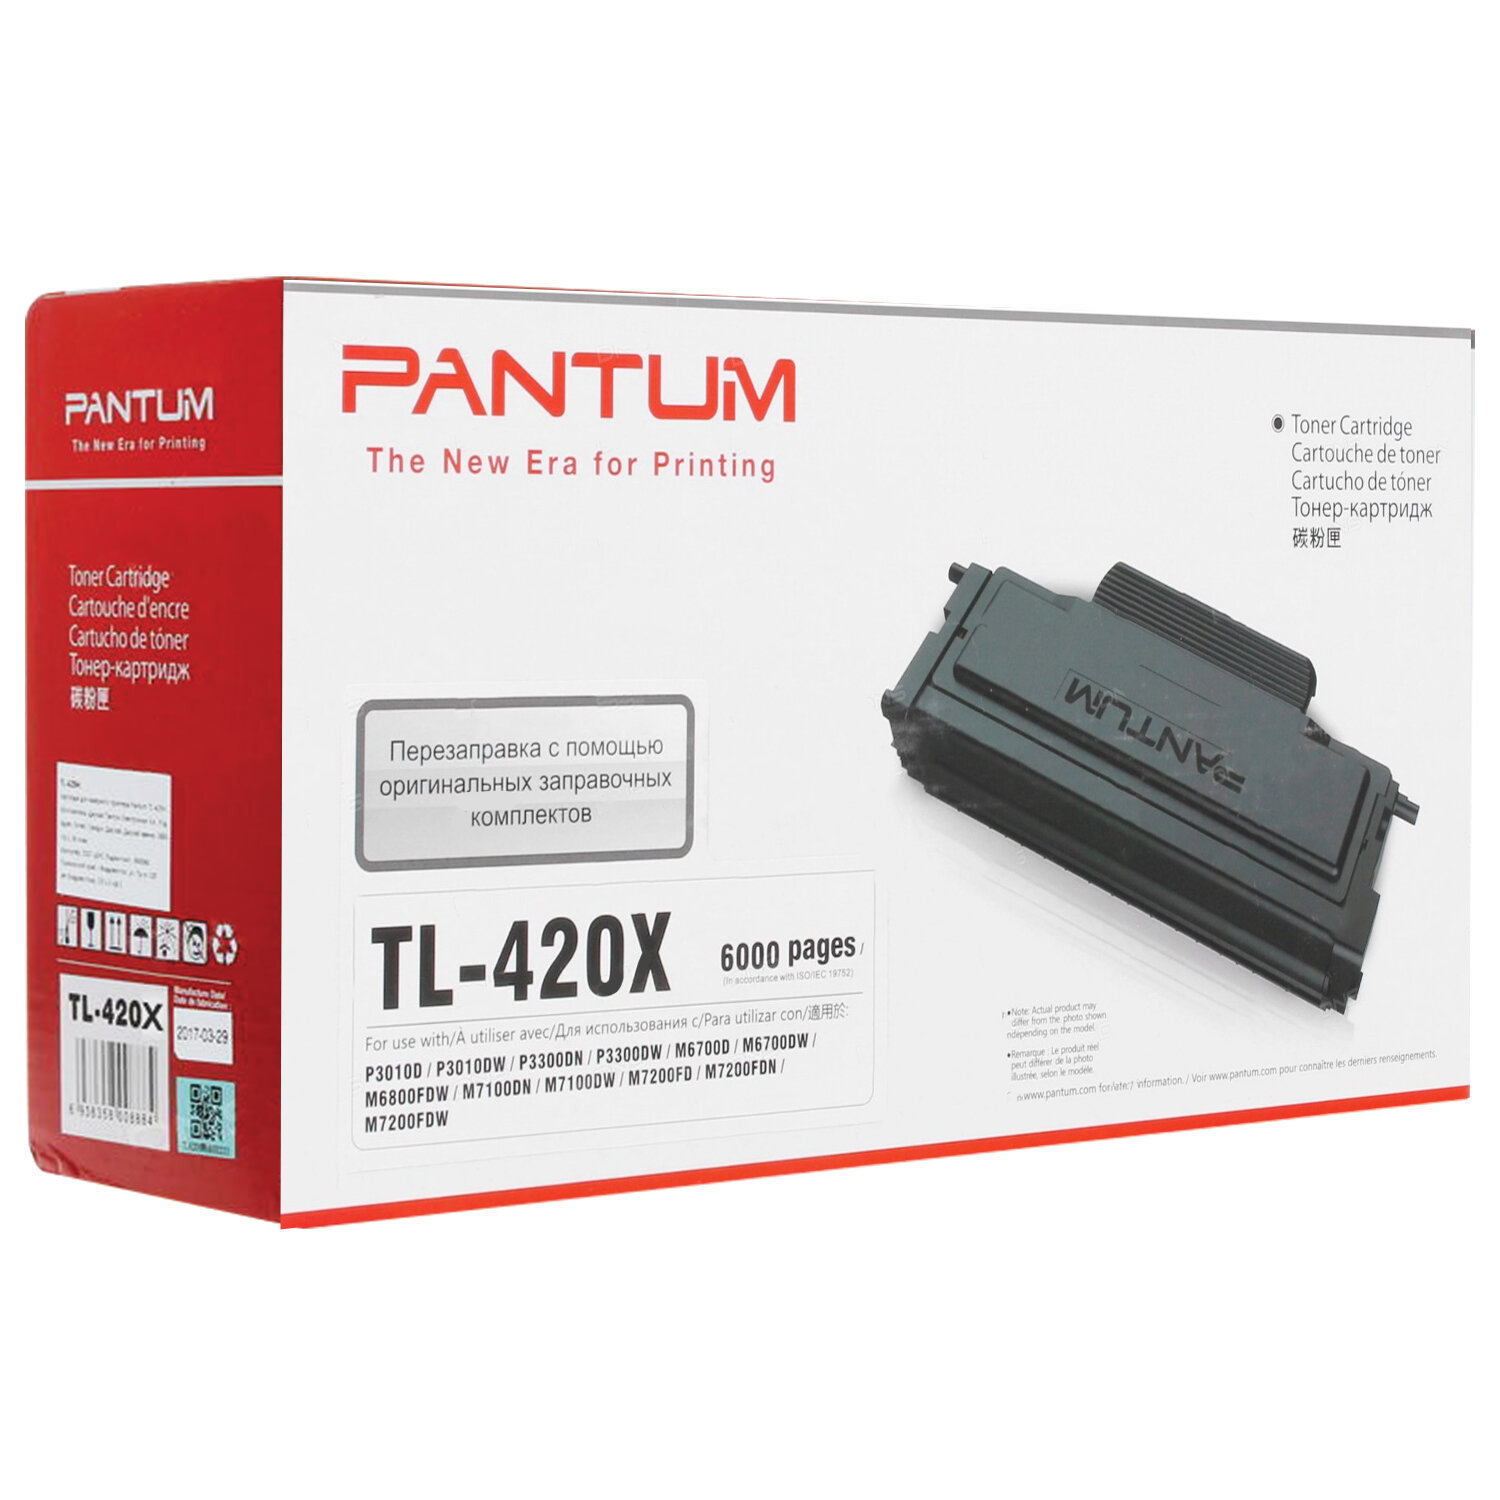 Pantum - PANTUM TL-420X